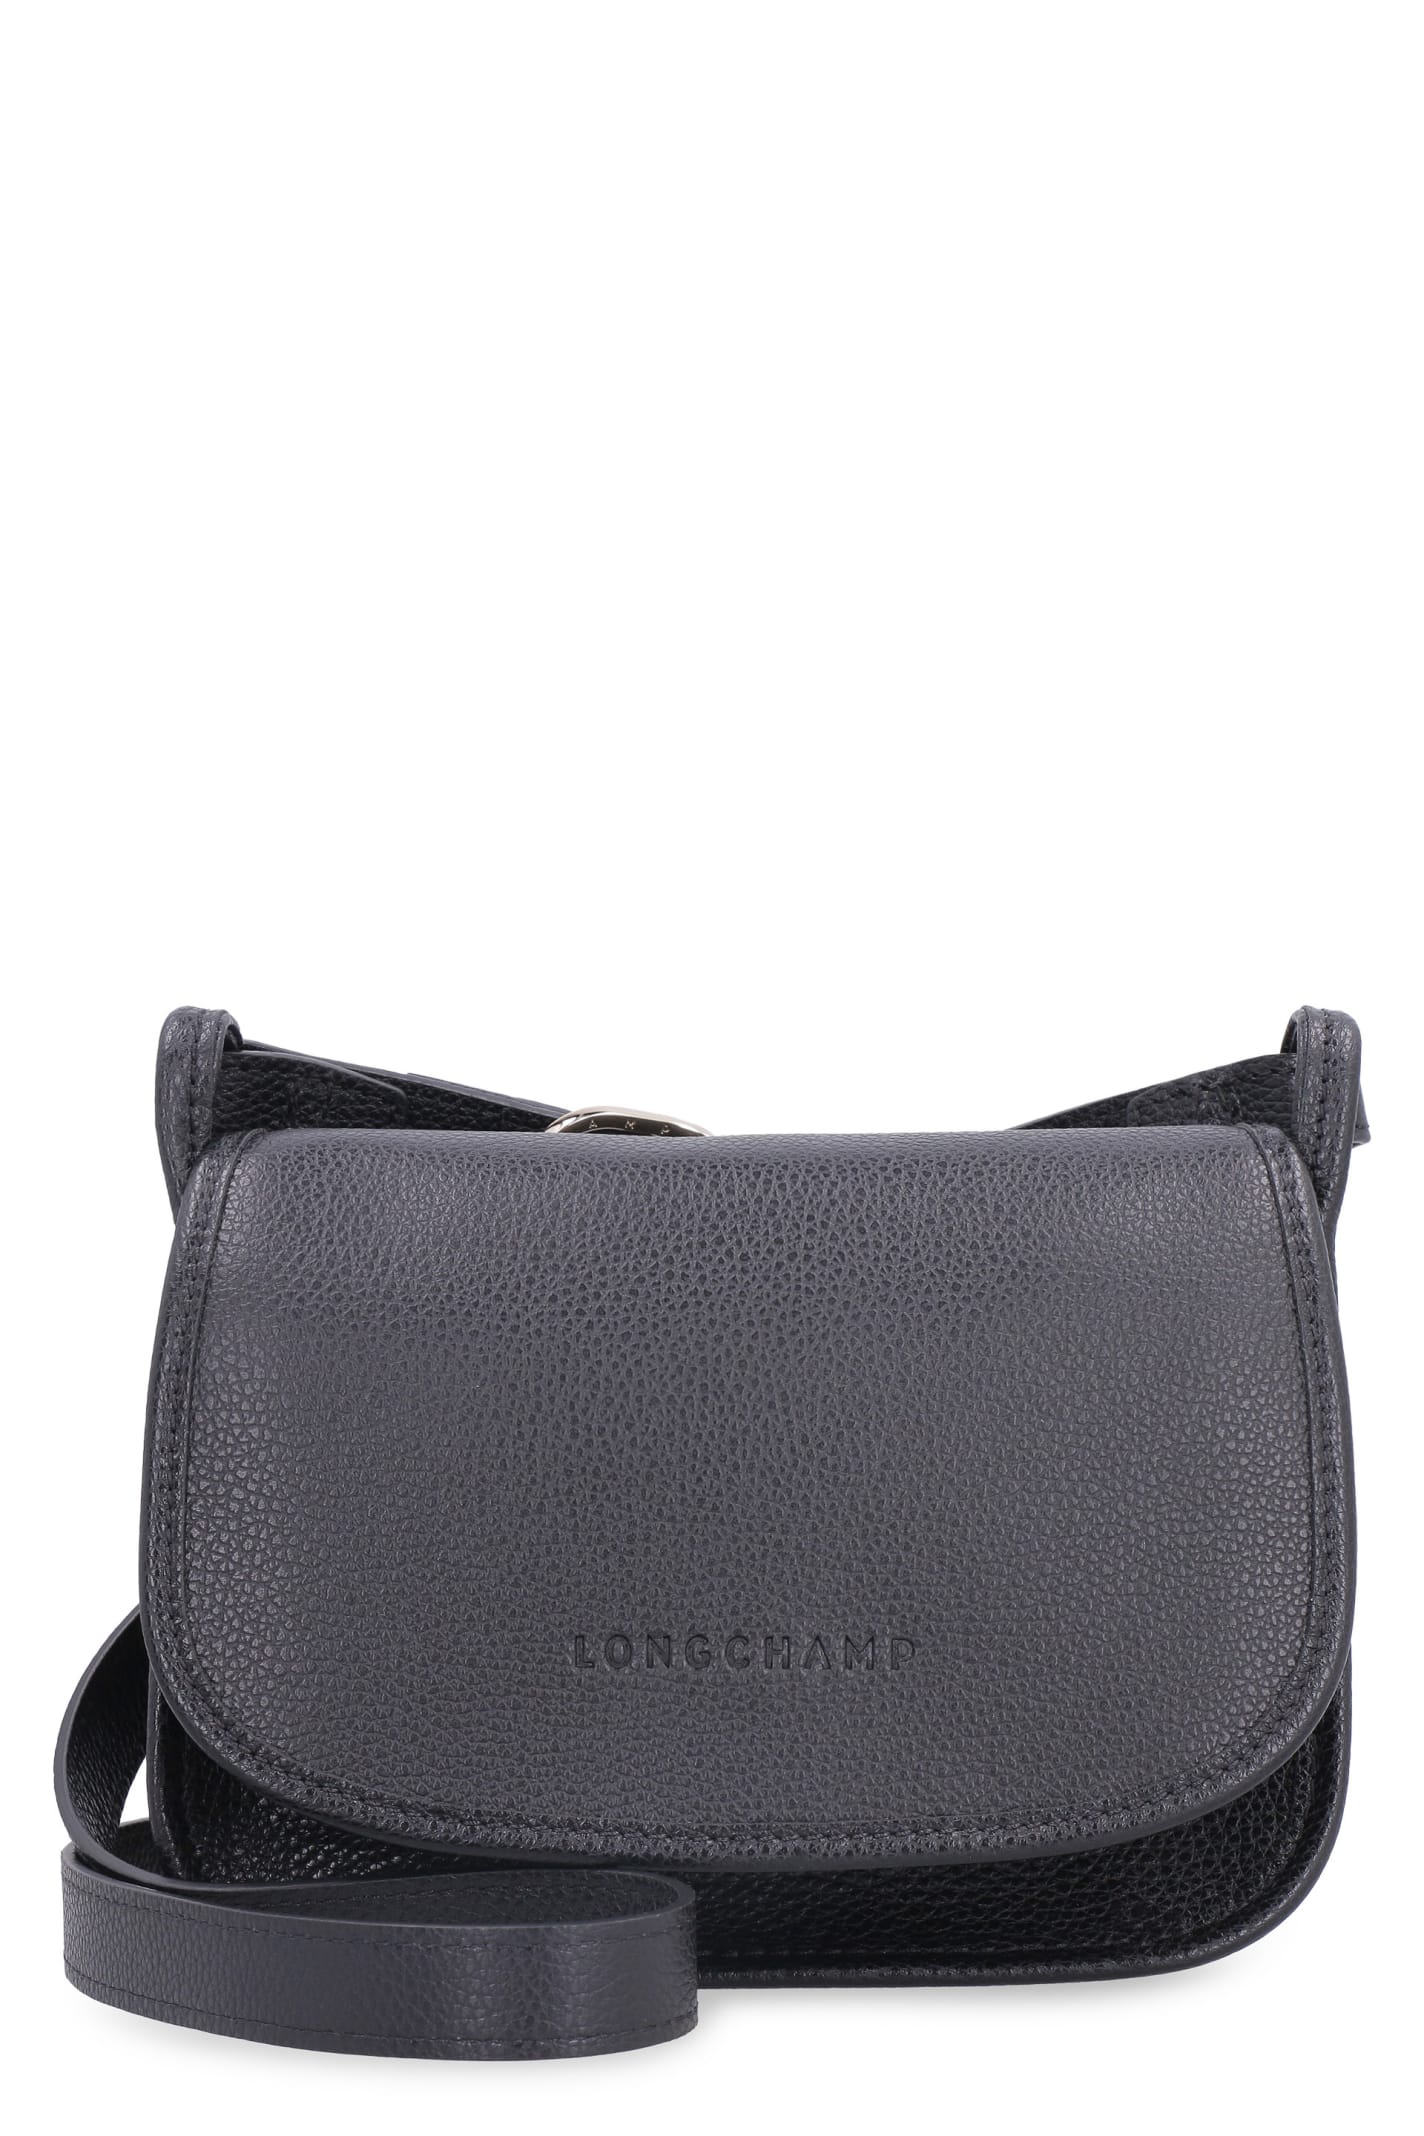 Longchamp Le Foulonné Leather Crossbody Bag